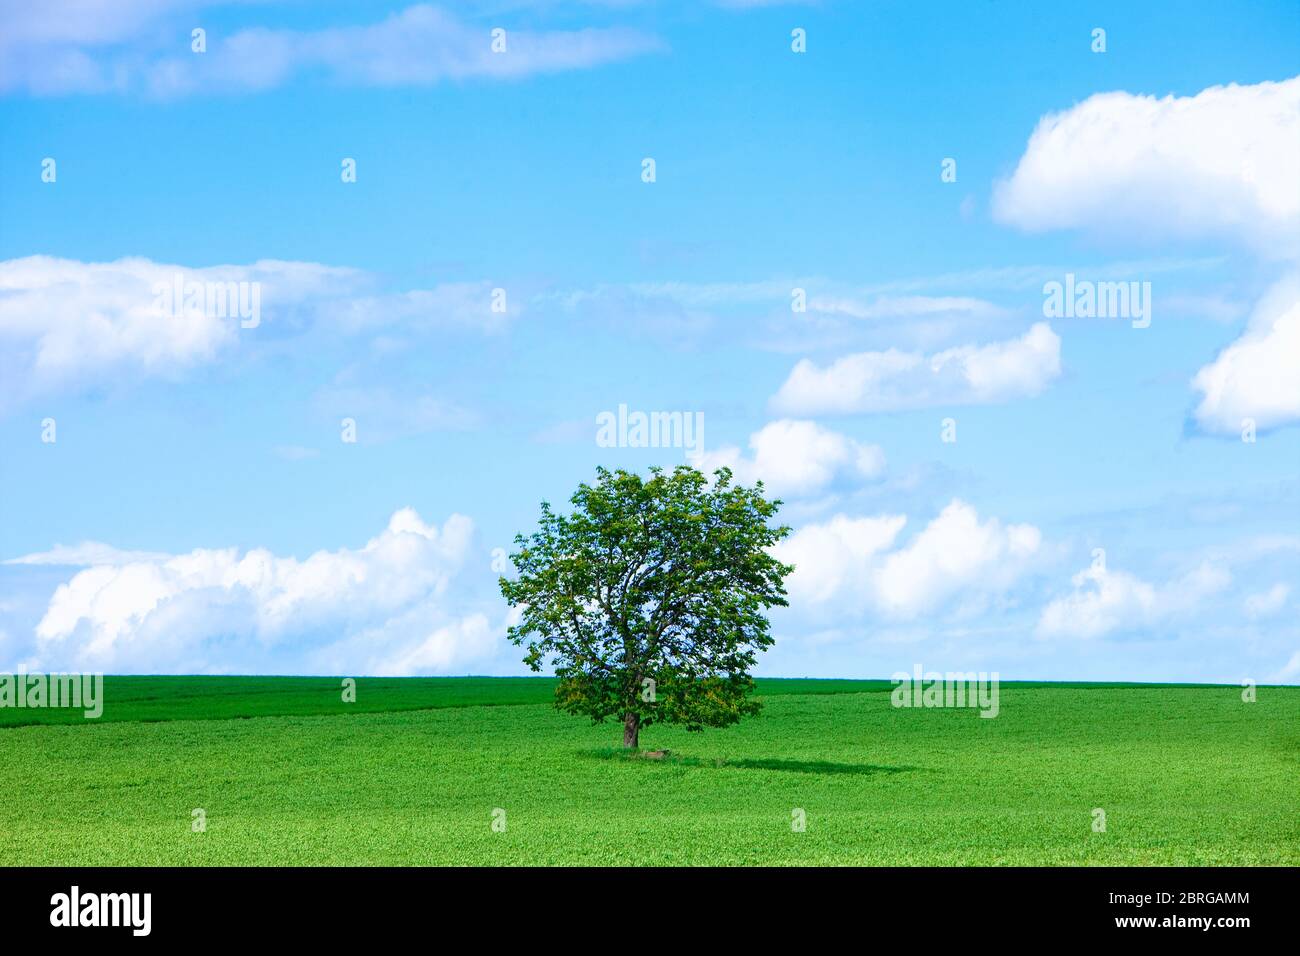 Název: Czech Republic, South Bohemia - Lone tree in a green field. Stock Photo